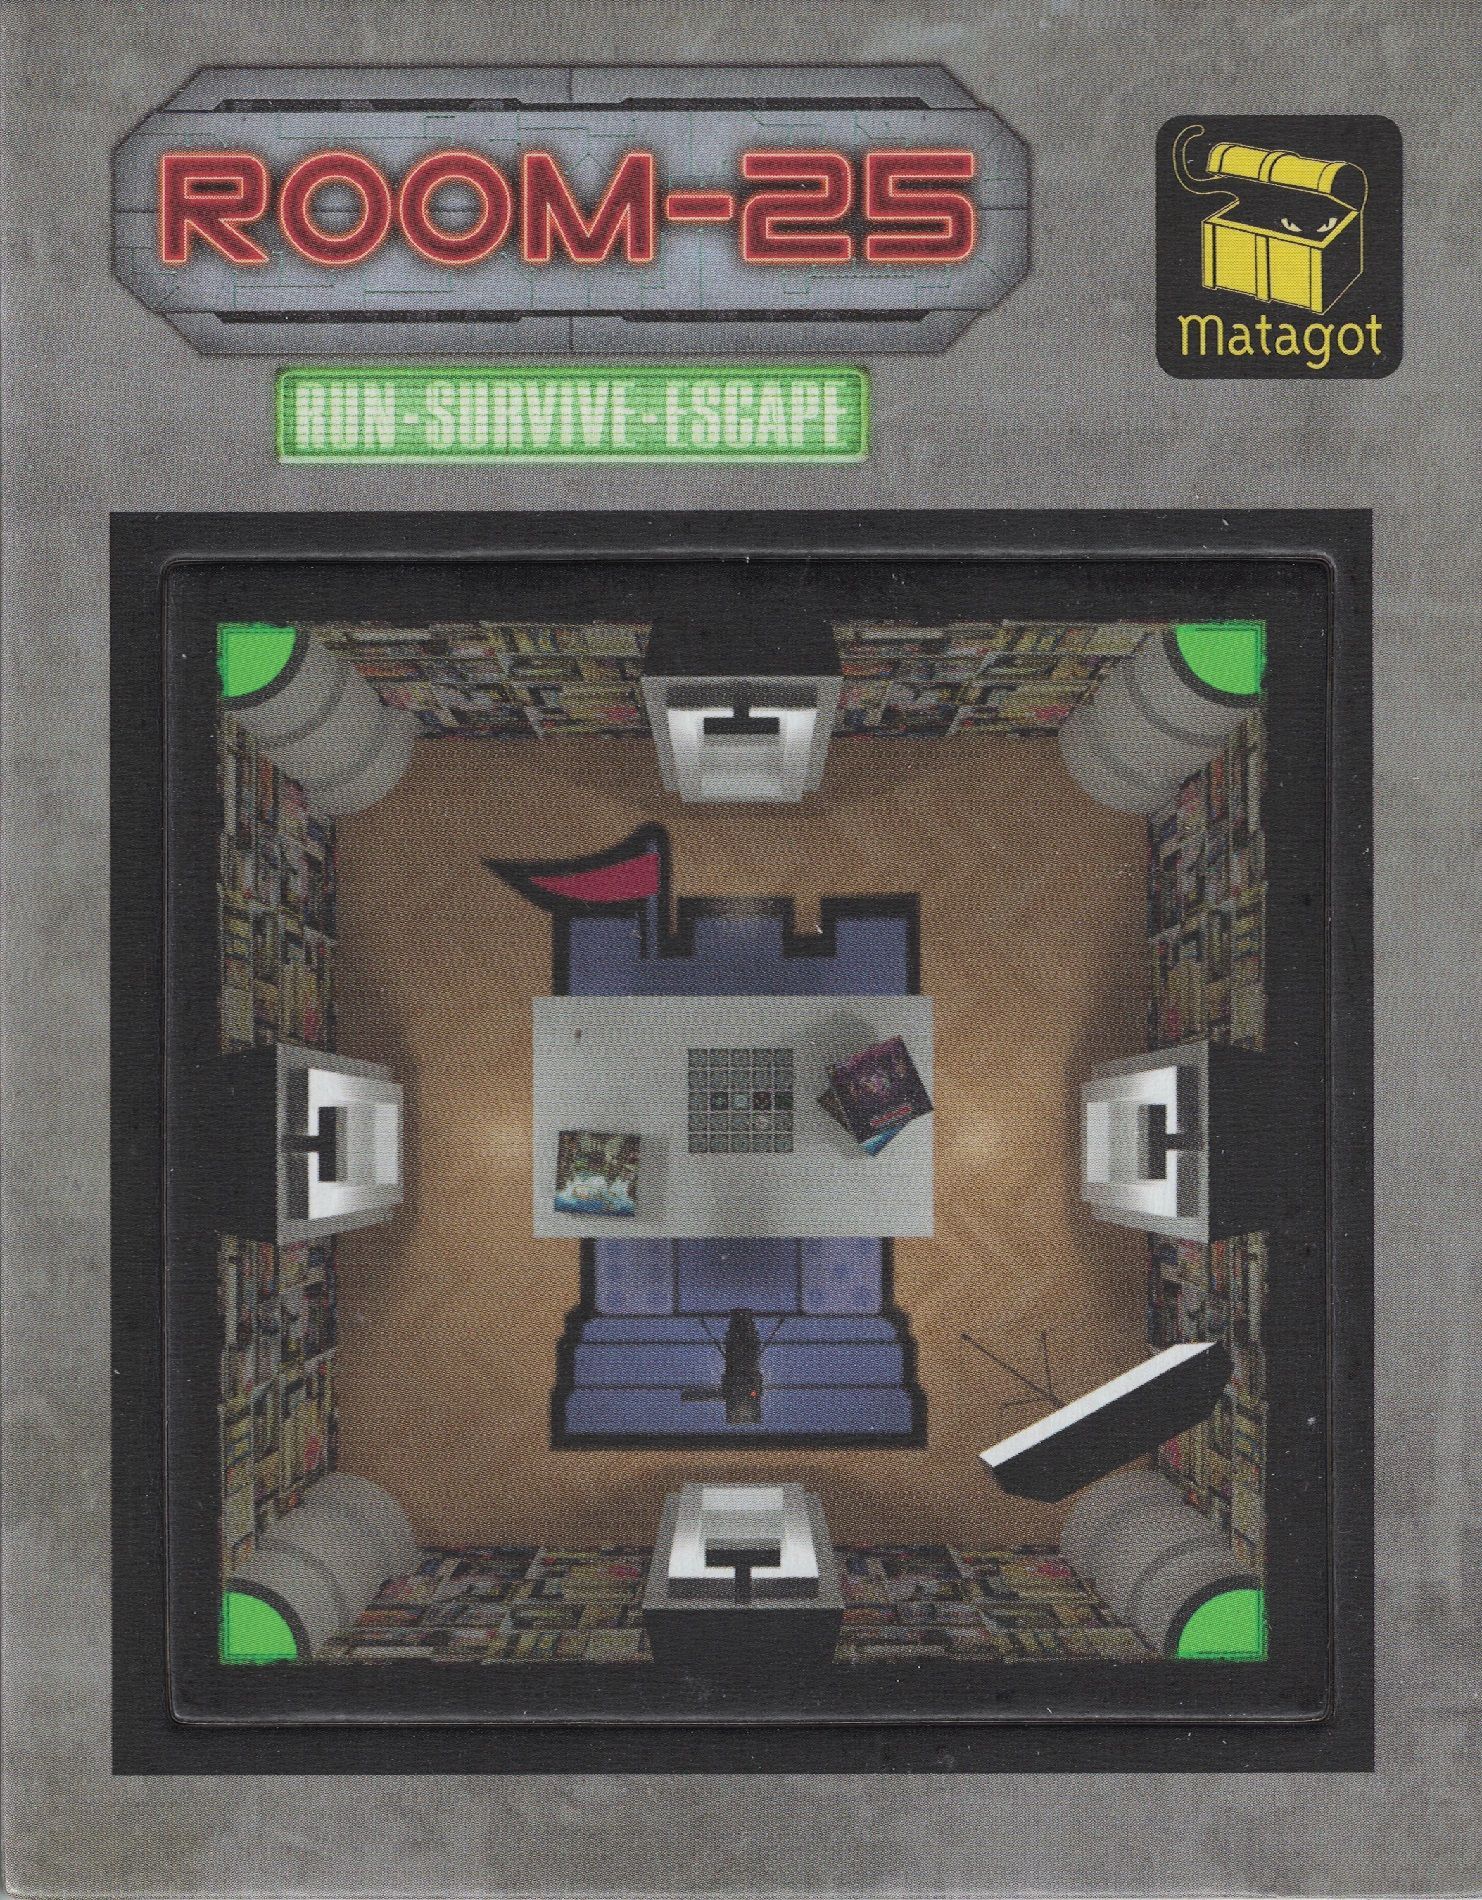 Игра комната 25. Комната 25. Room 25 настольная игра. Настолка комната 25. Комната 25 расширенное издание.